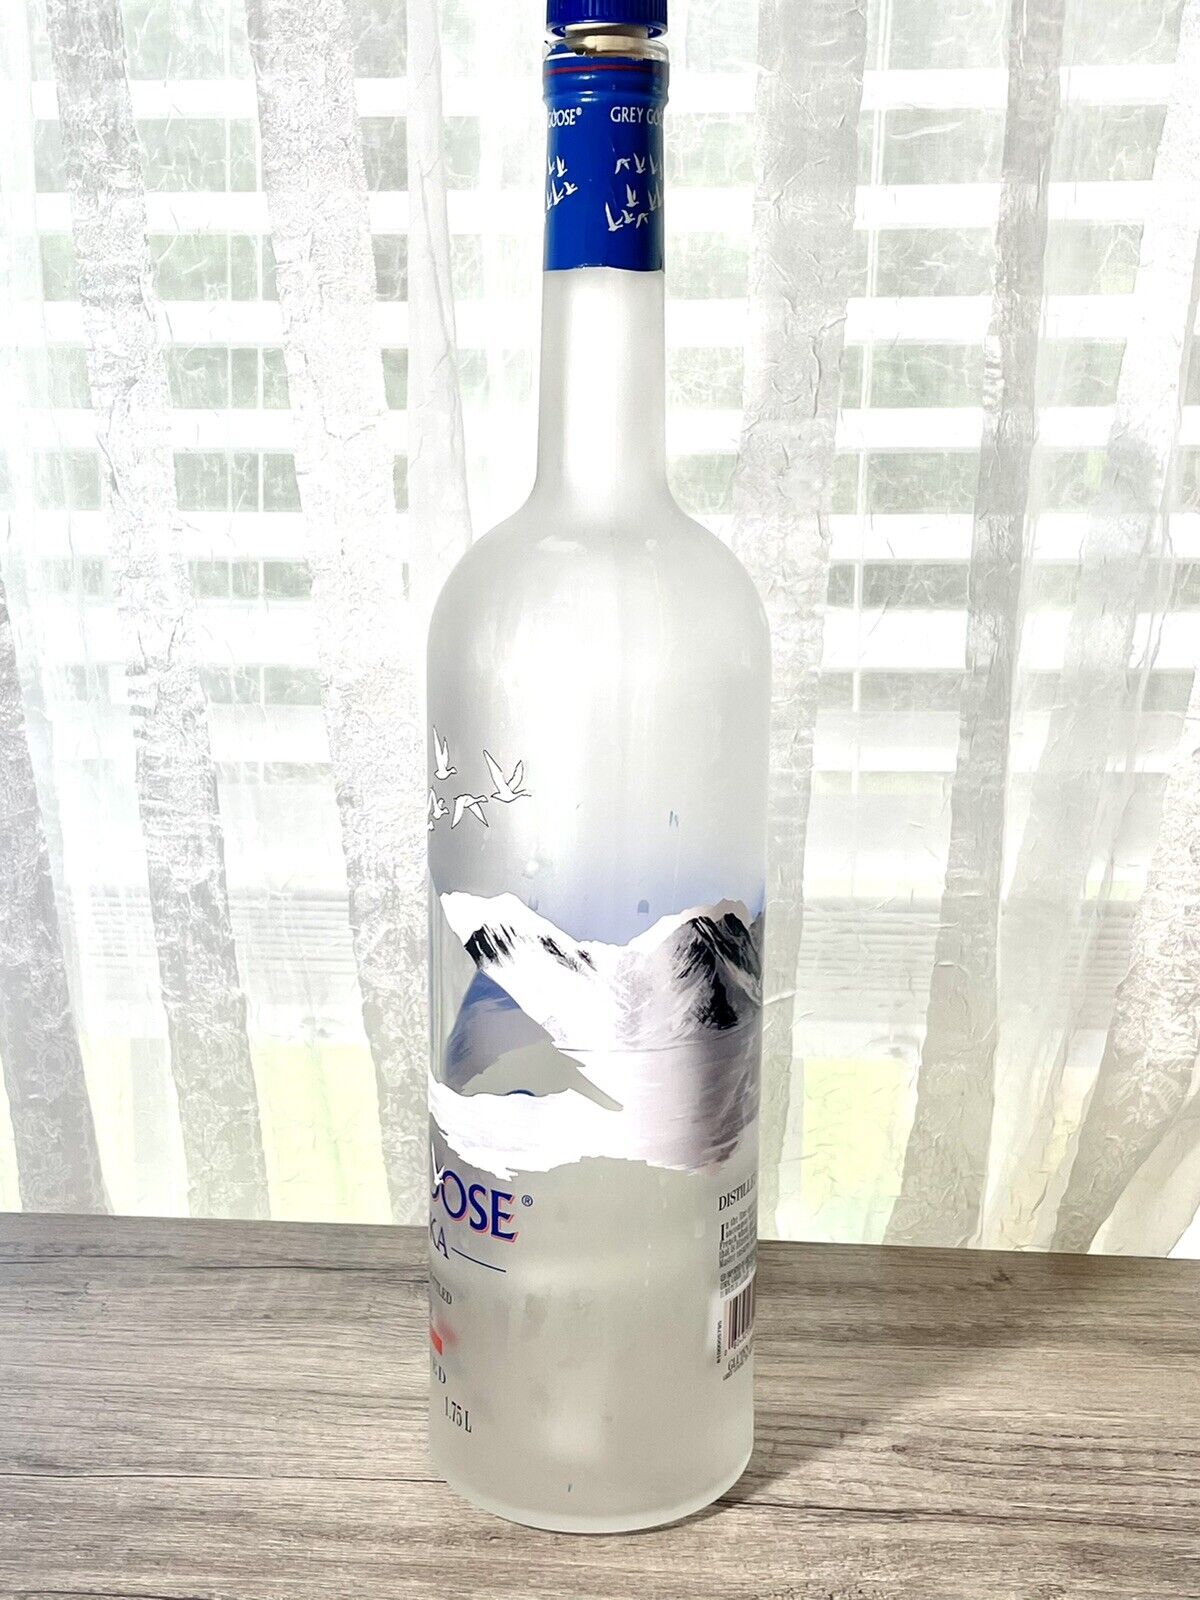 Biggest Bottle of Grey Goose: Exploring the Largest Size Options for Grey Goose Vodka